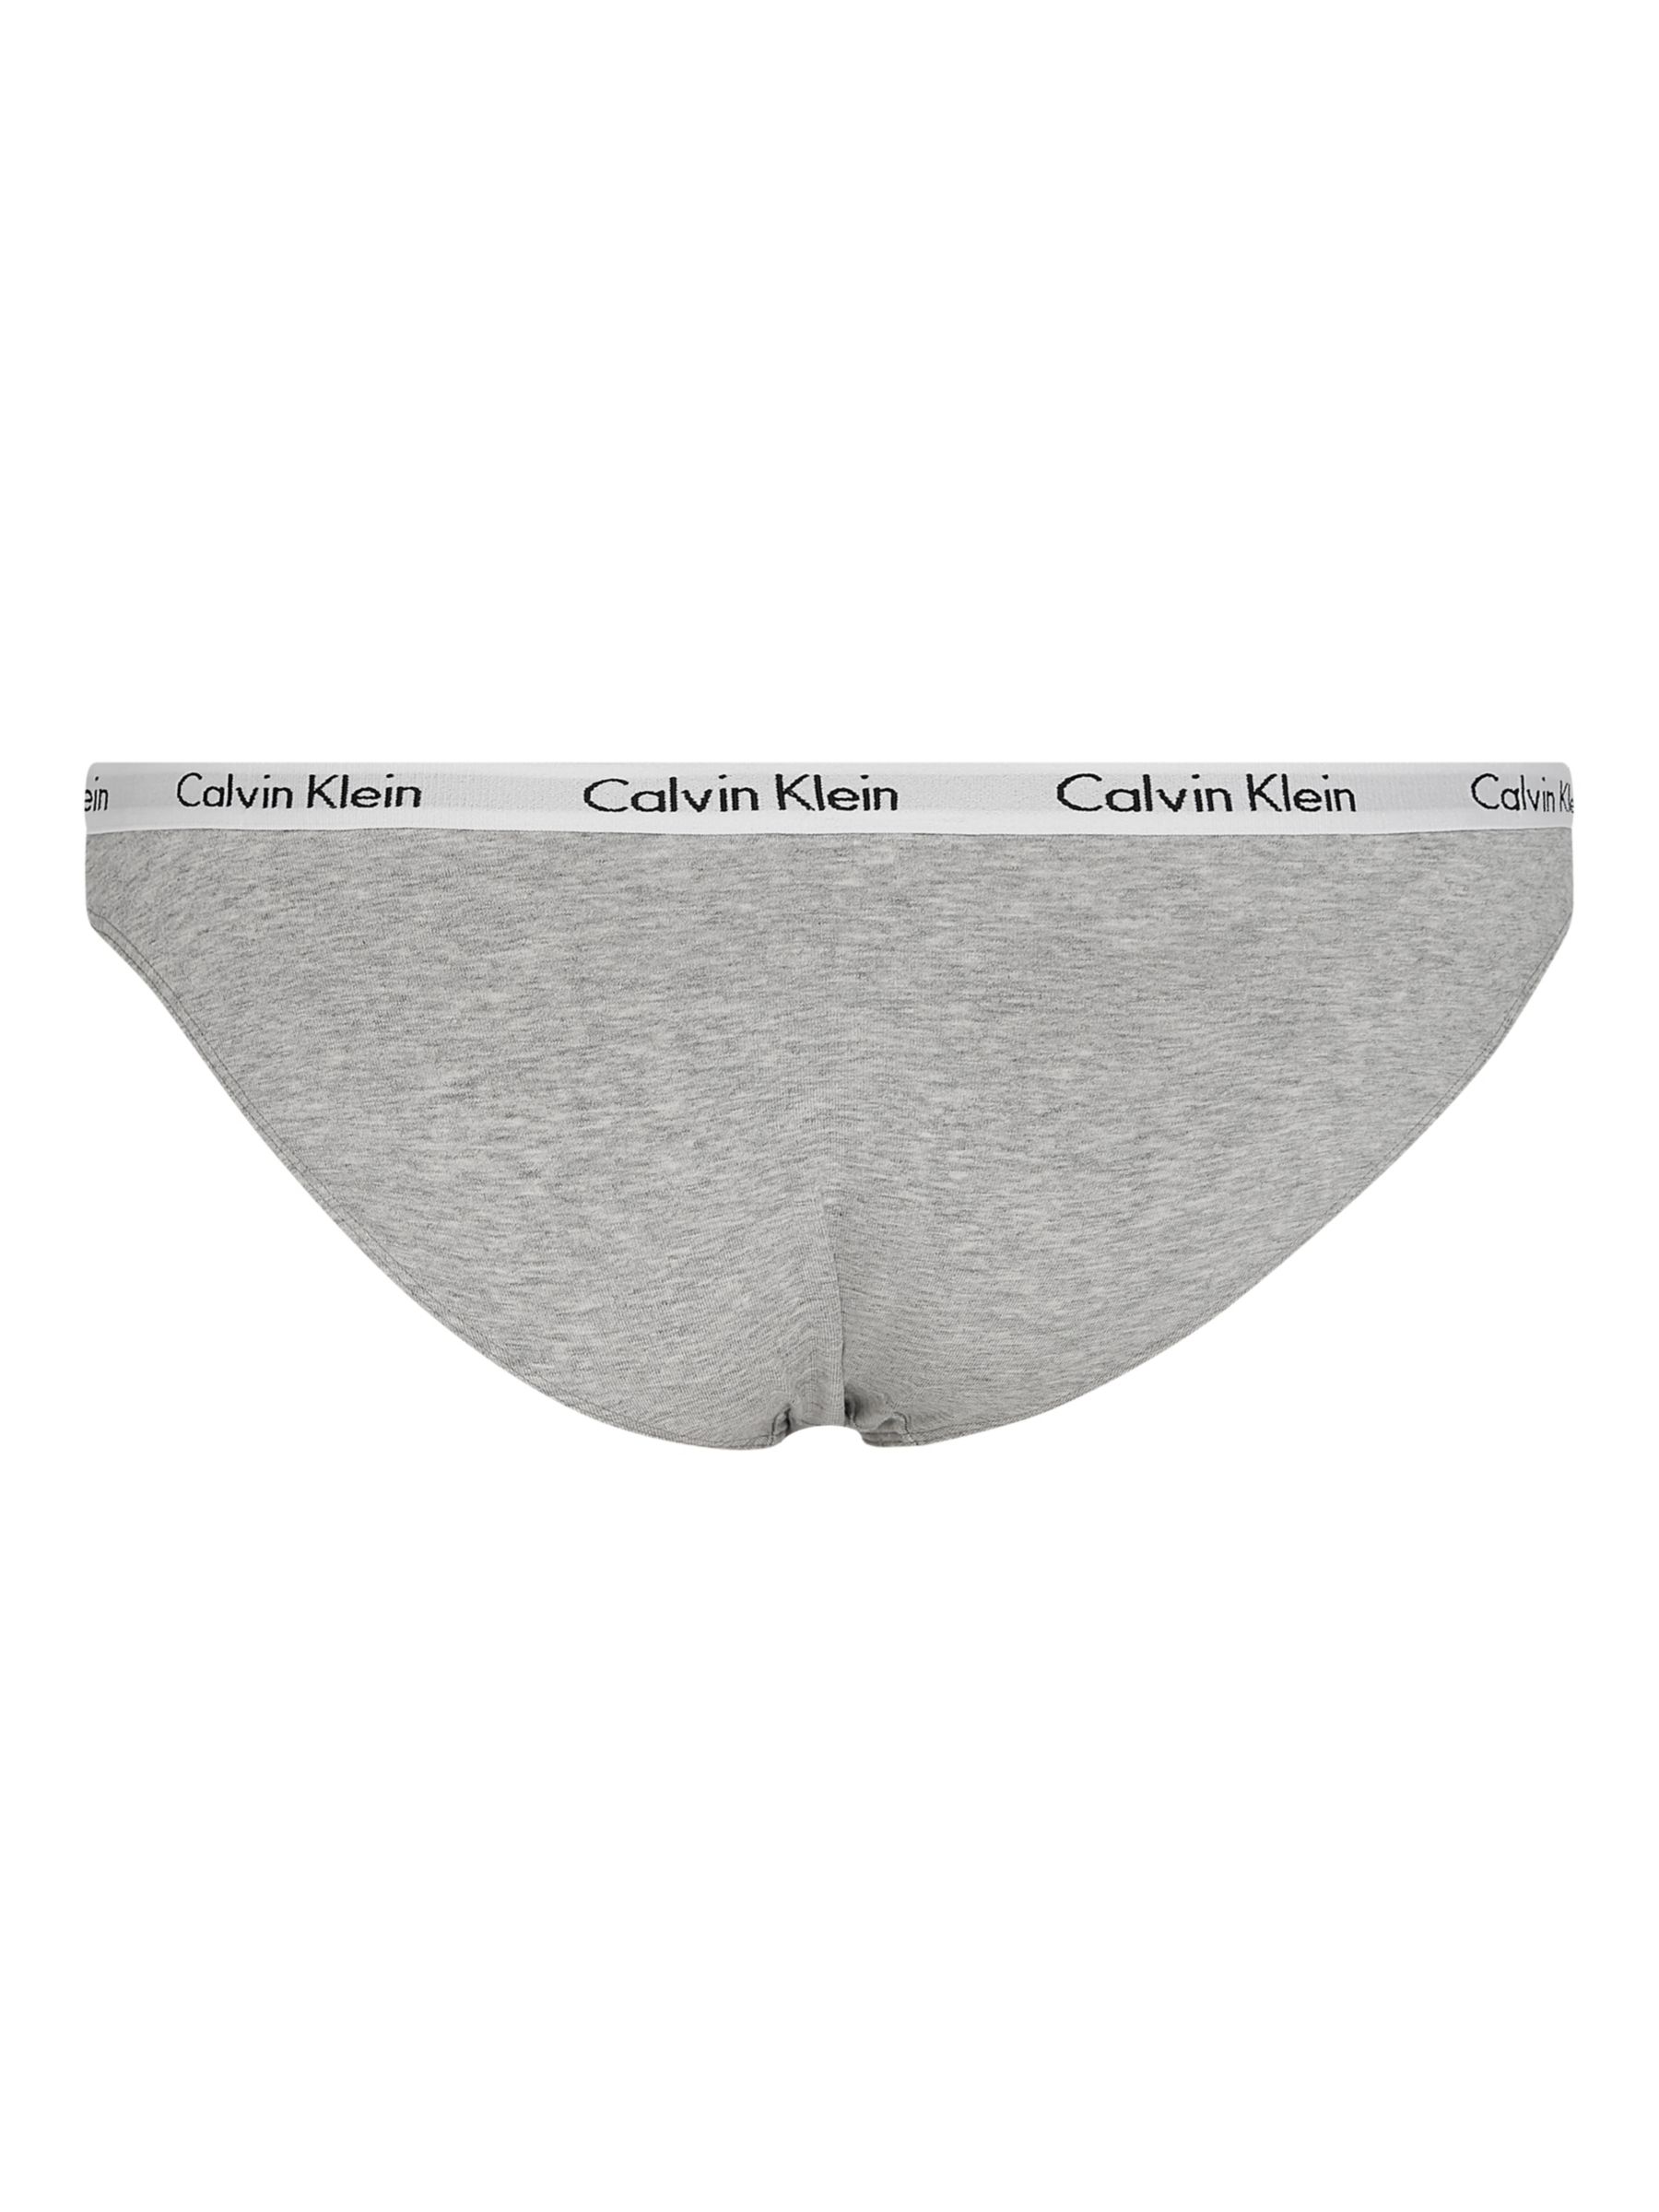 Calvin Klein Carousel Bikini Knickers, Grey Heather at John Lewis ...